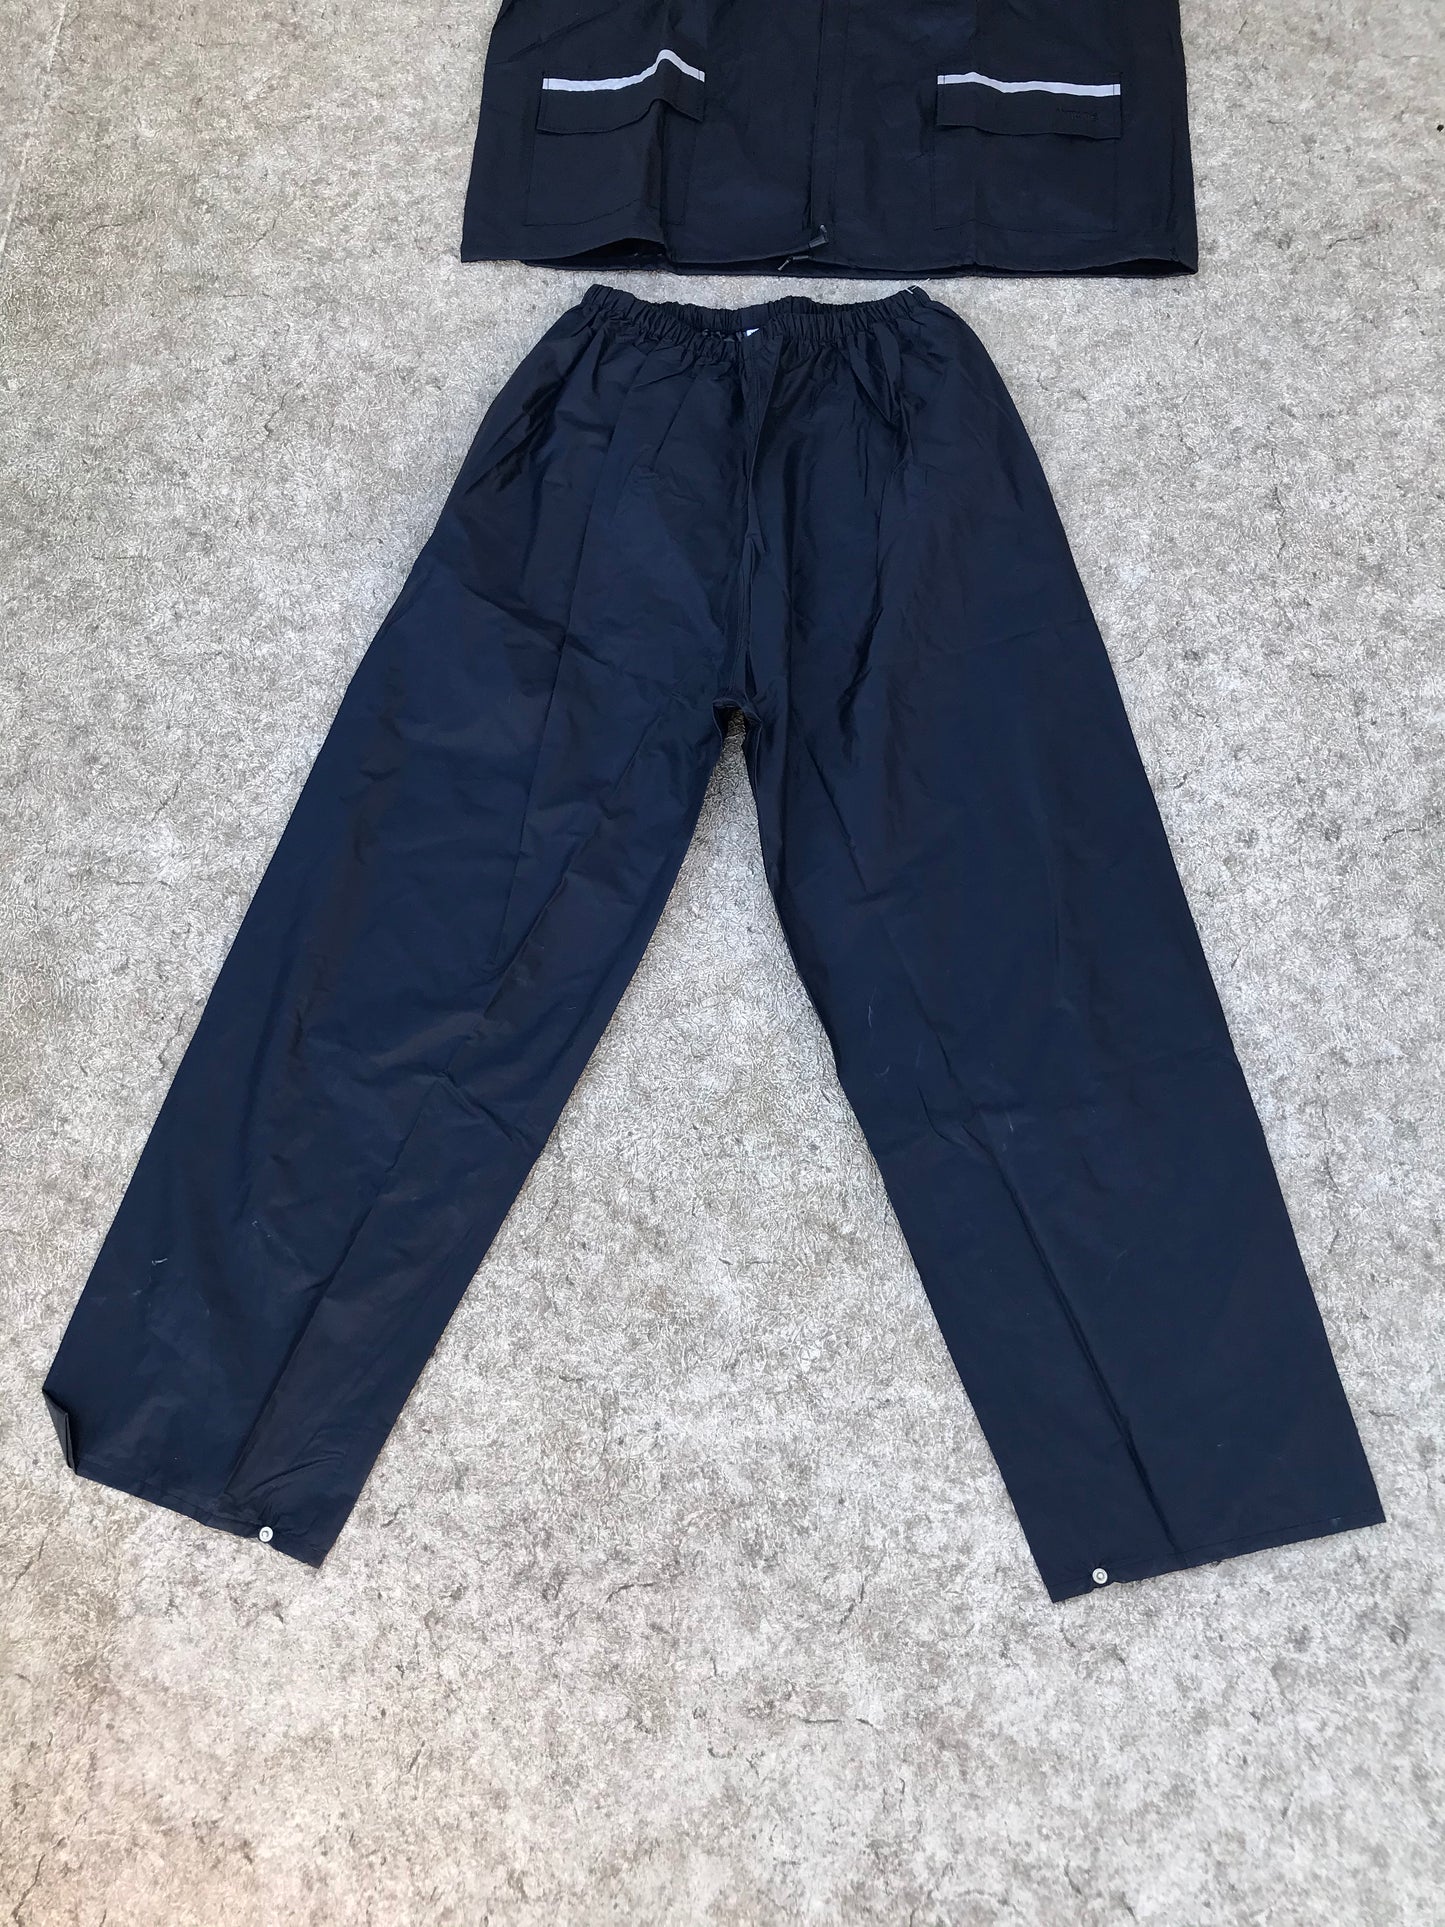 Rain Coat Men's Size X Large With Pants Viking 2 pc Set Marine Blue 100% Waterproof Motorcycle Bike Work Wear New With Tags